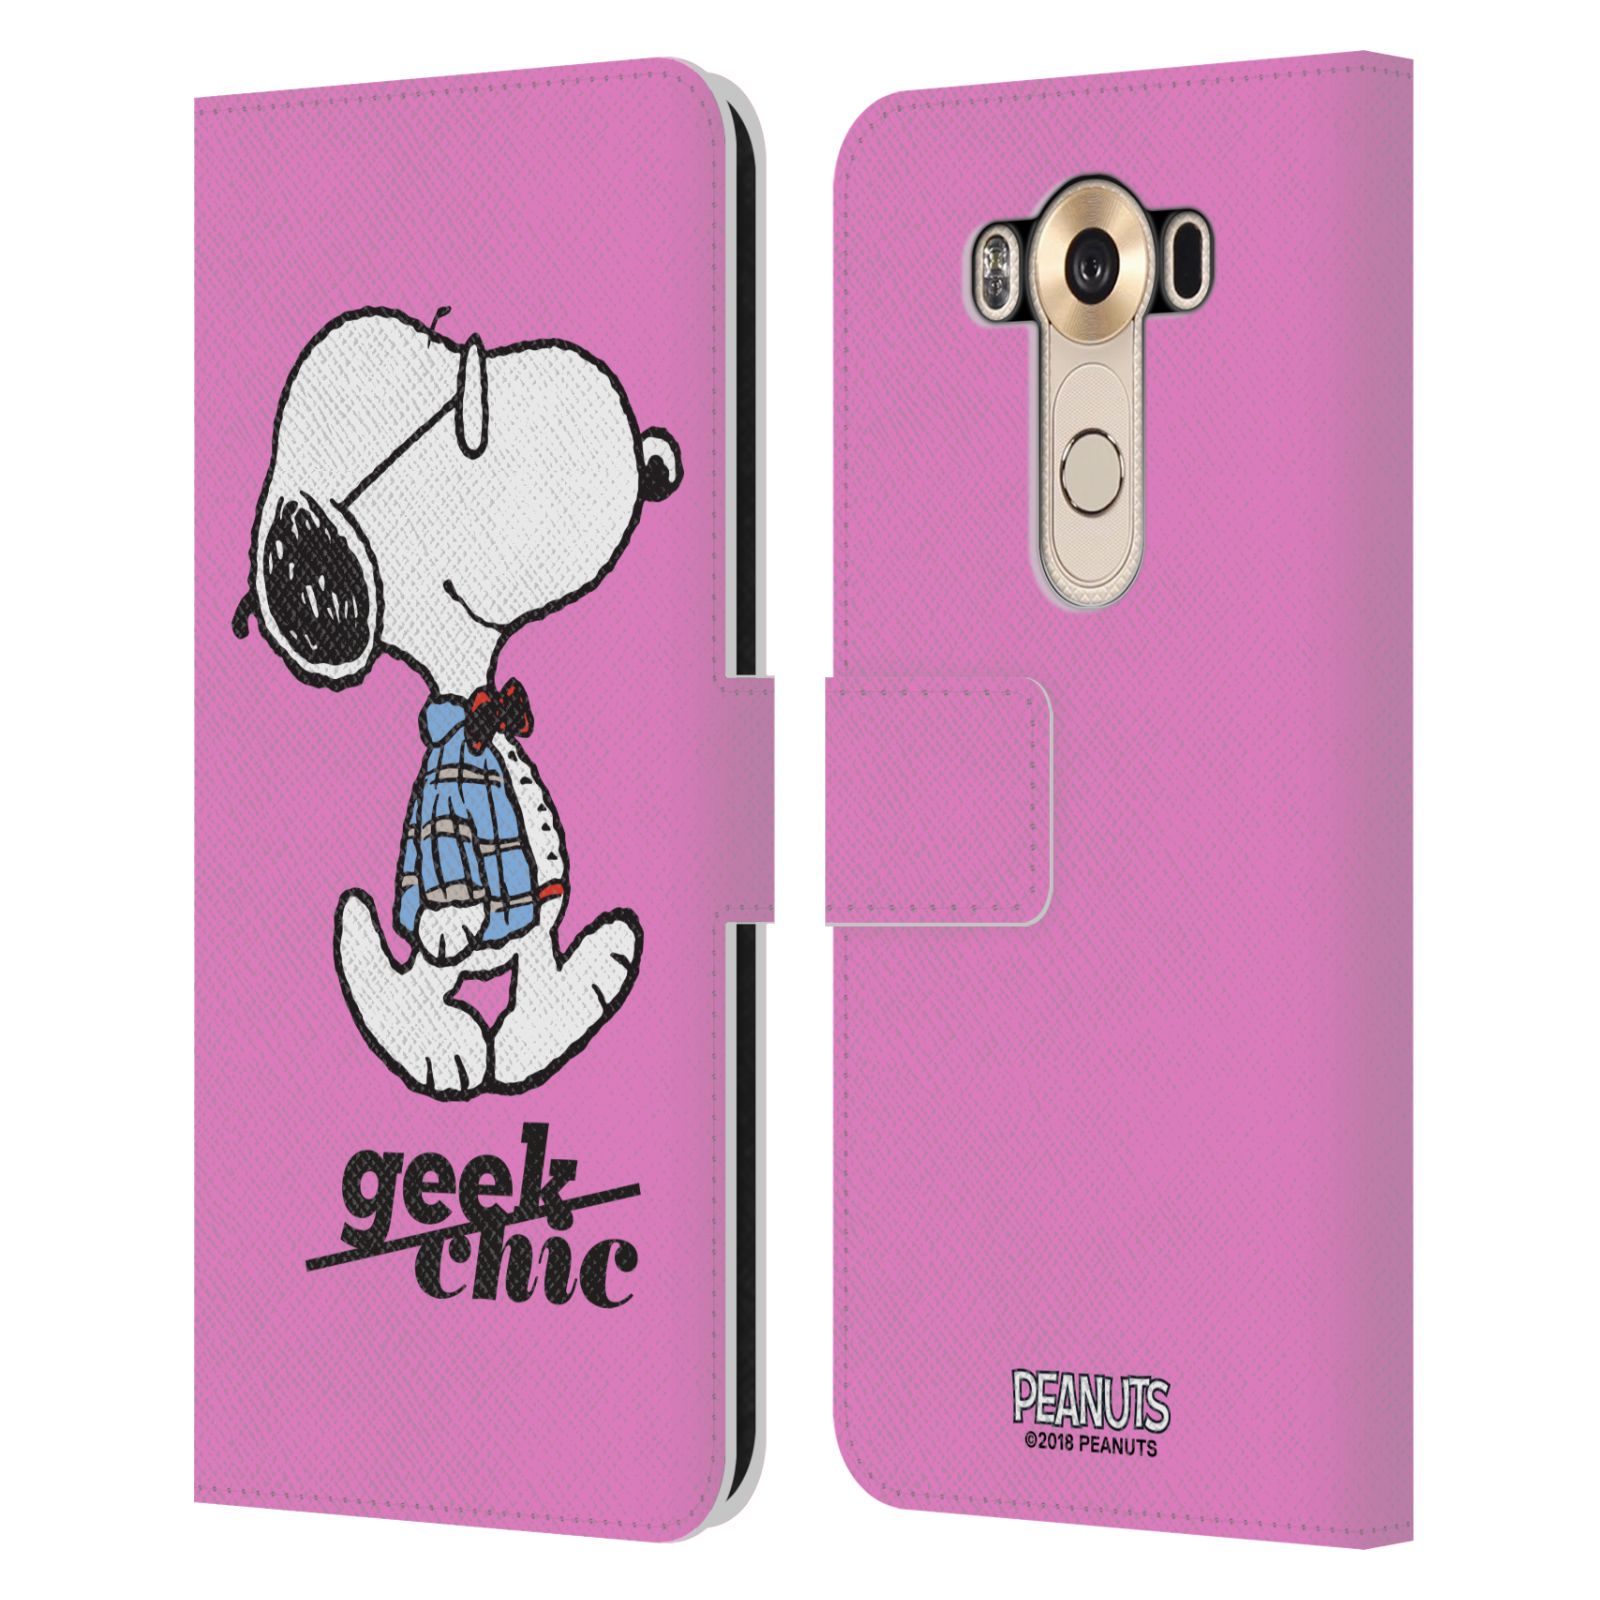 Pouzdro na mobil LG V10 - Head Case - Peanuts - růžový pejsek snoopy nerd